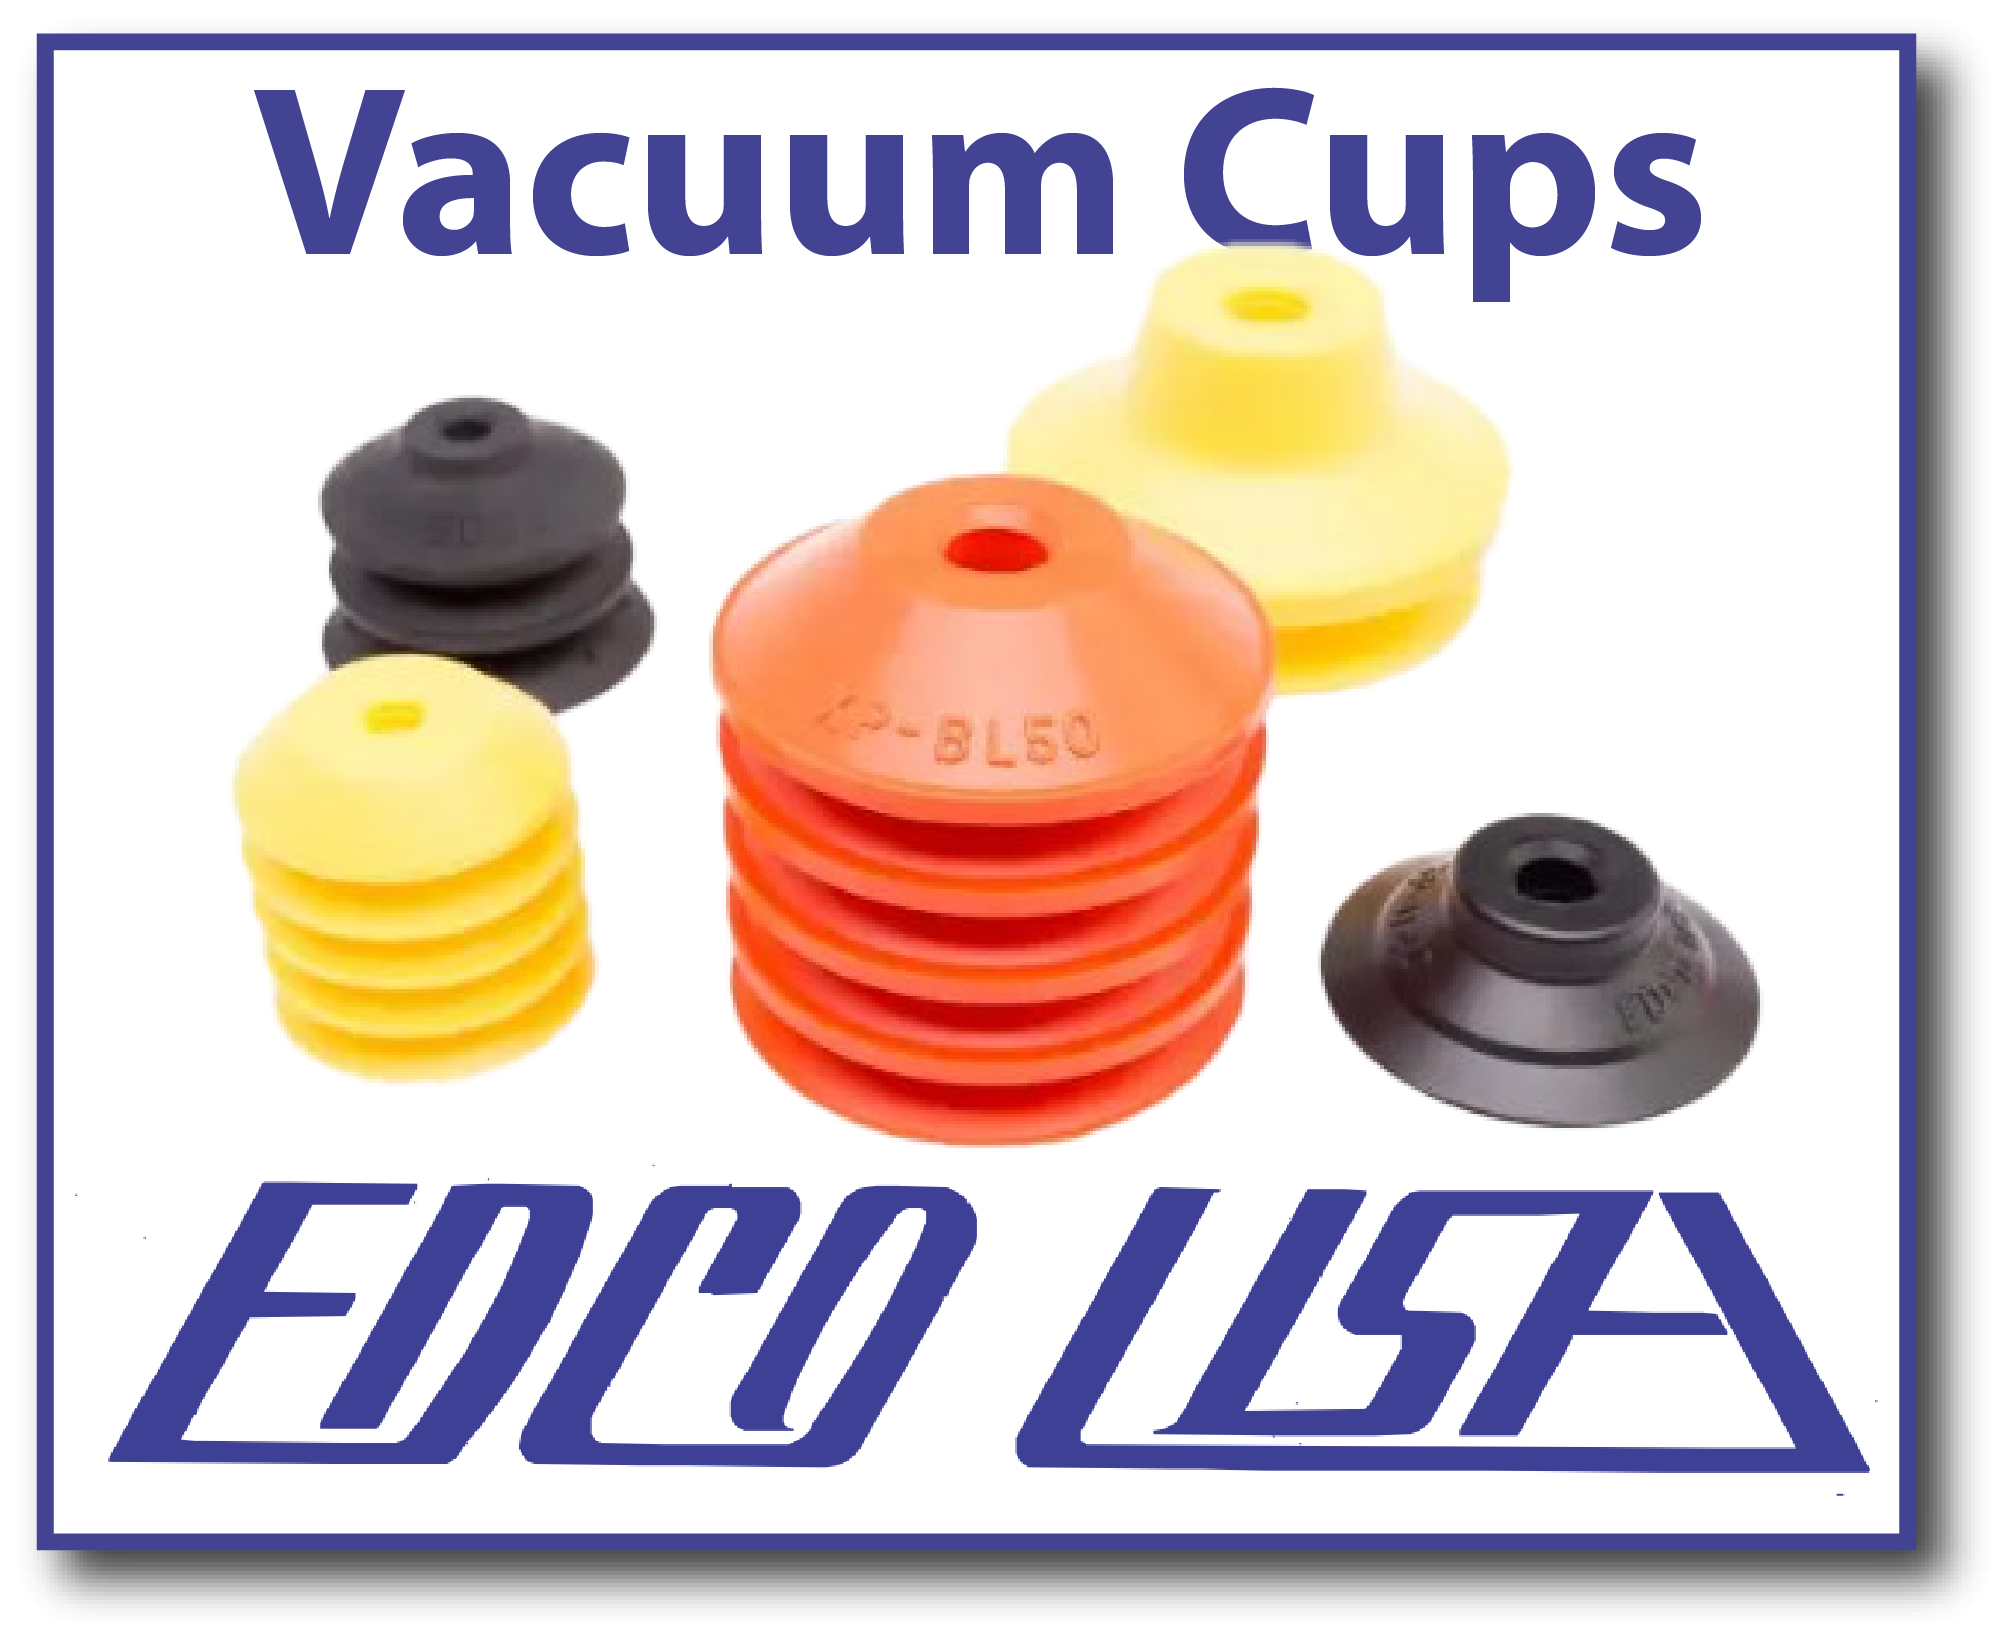 Edco Vacuum Cups and Accessories